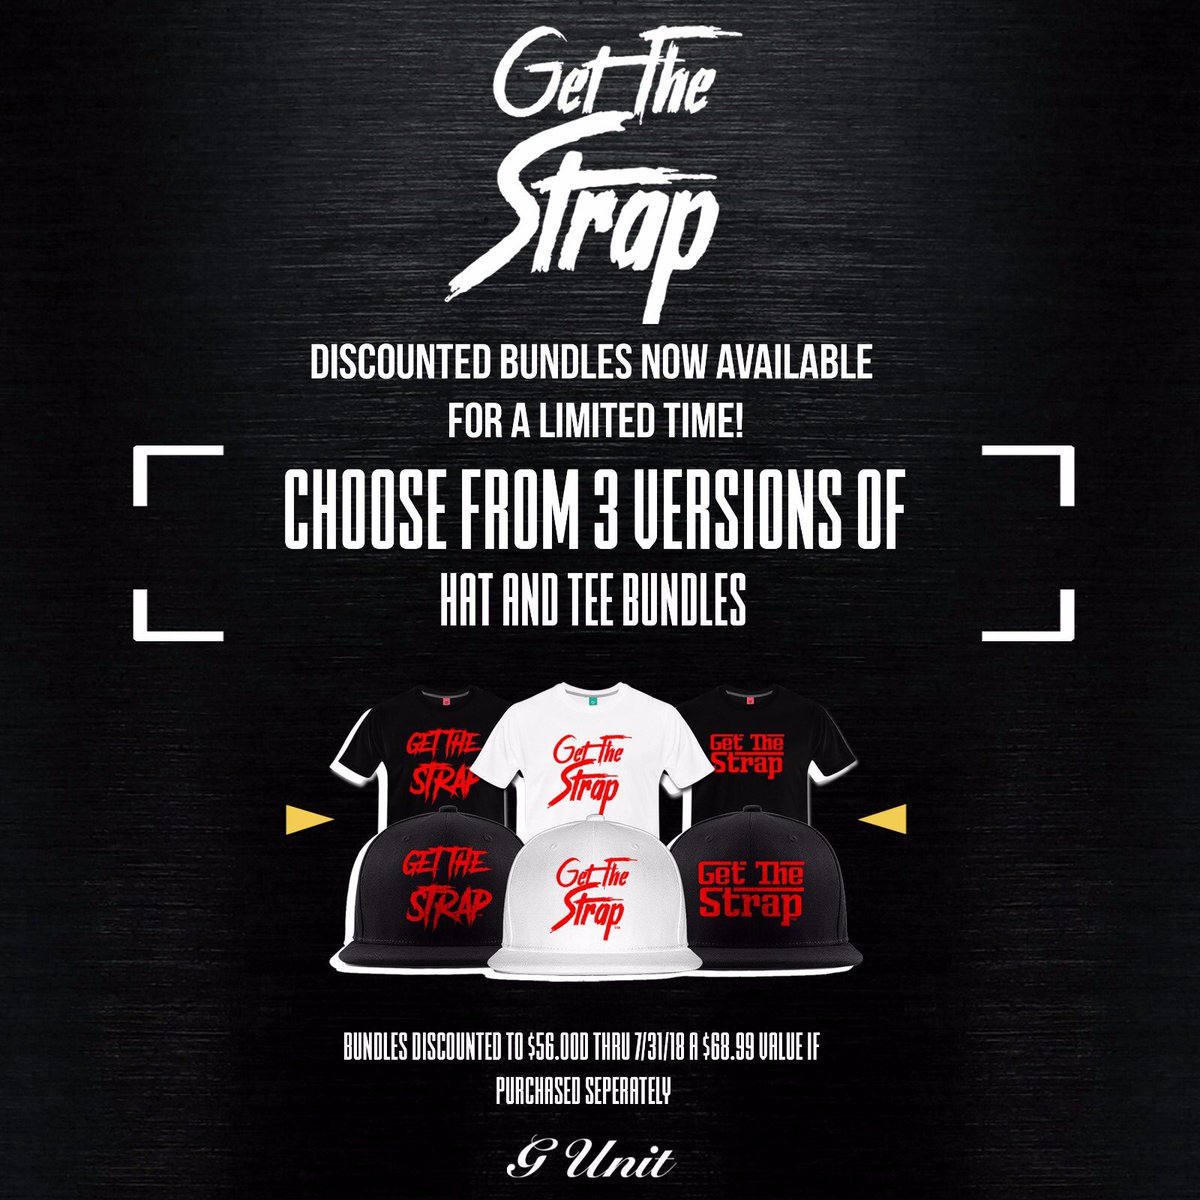 Get The Strap July Sale | https://t.co/qm8LJTdCFH https://t.co/CZAVyef4cb